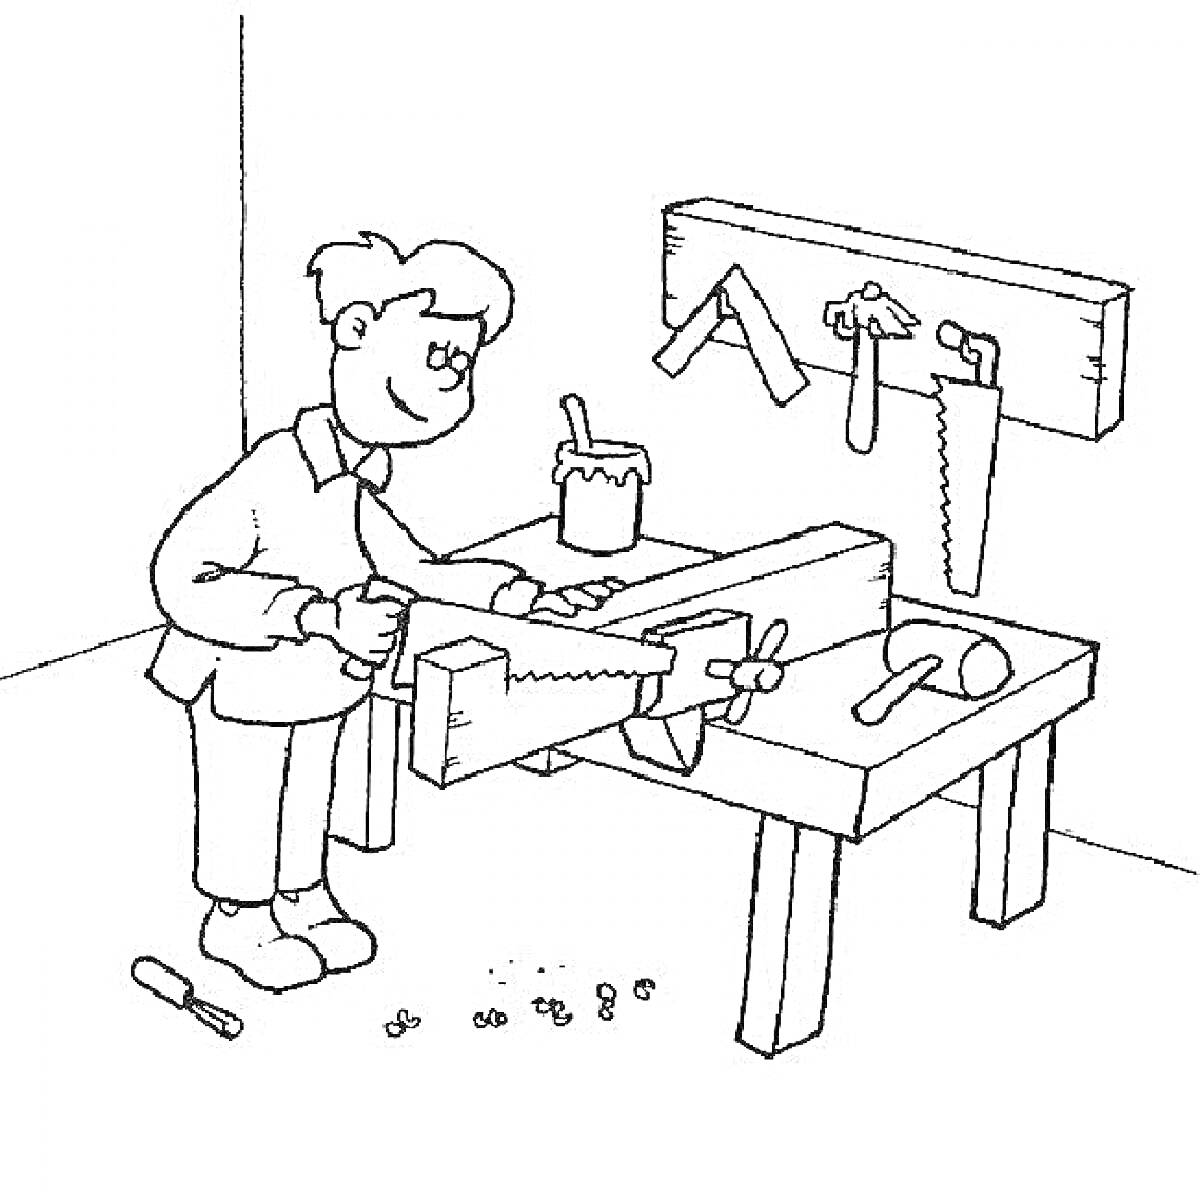 Раскраска Плотник за рабочим столом с инструментами (пила, молоток, клещи, карандаш, струбцина и гвозди)